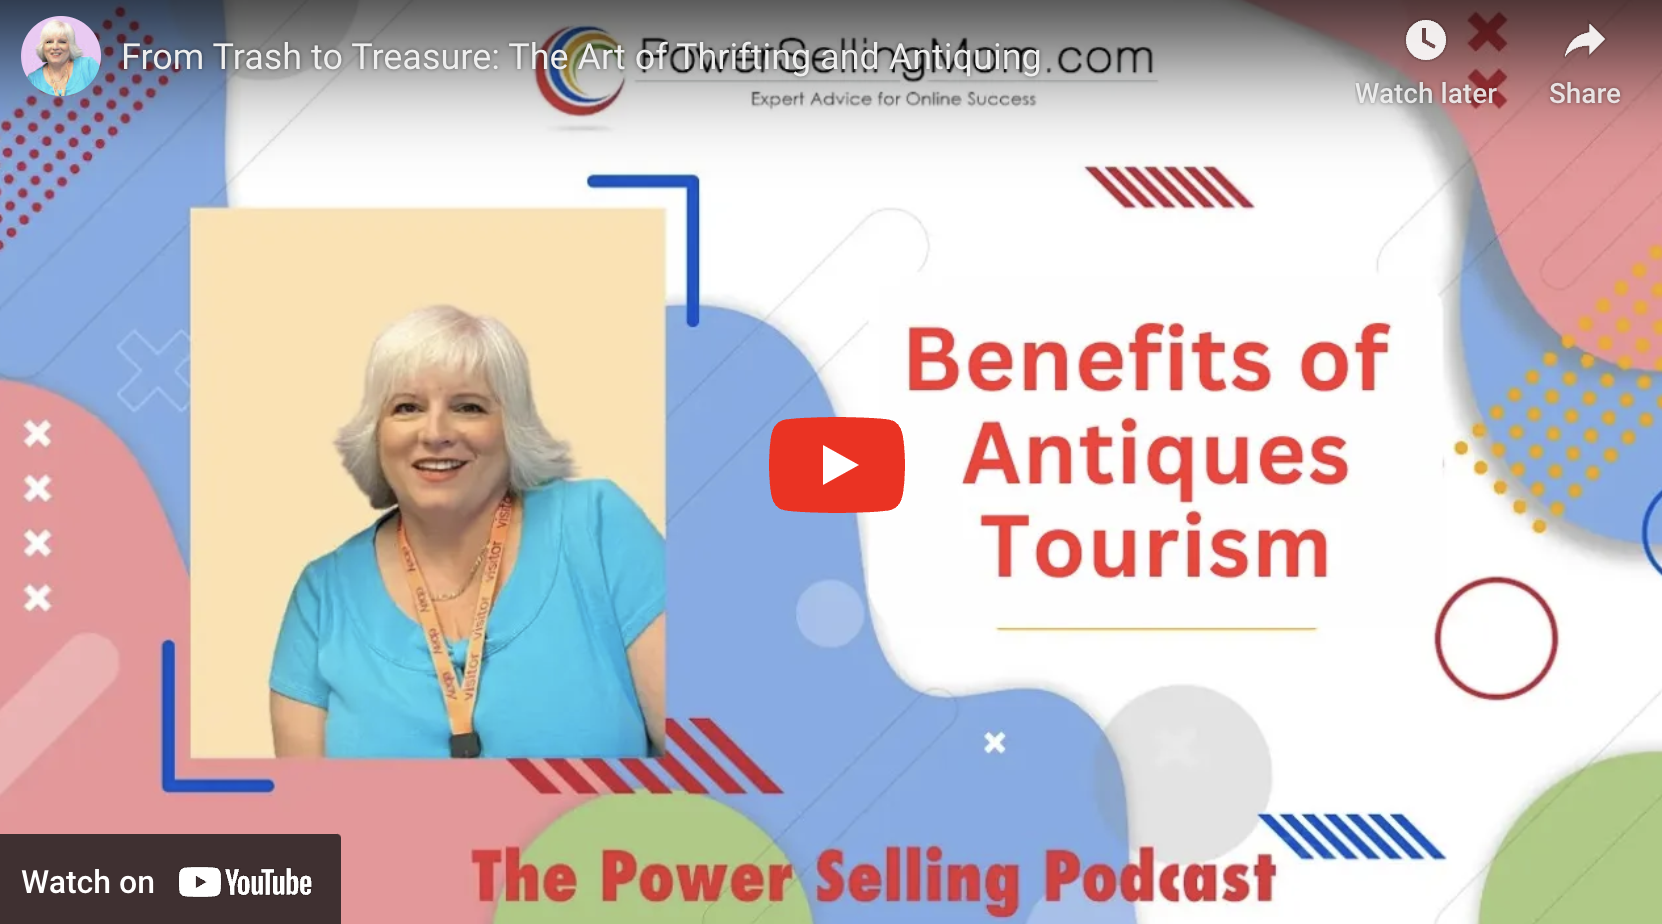 Wayne Jordan Shares Insider Tips about the Antique Tourism Industry.